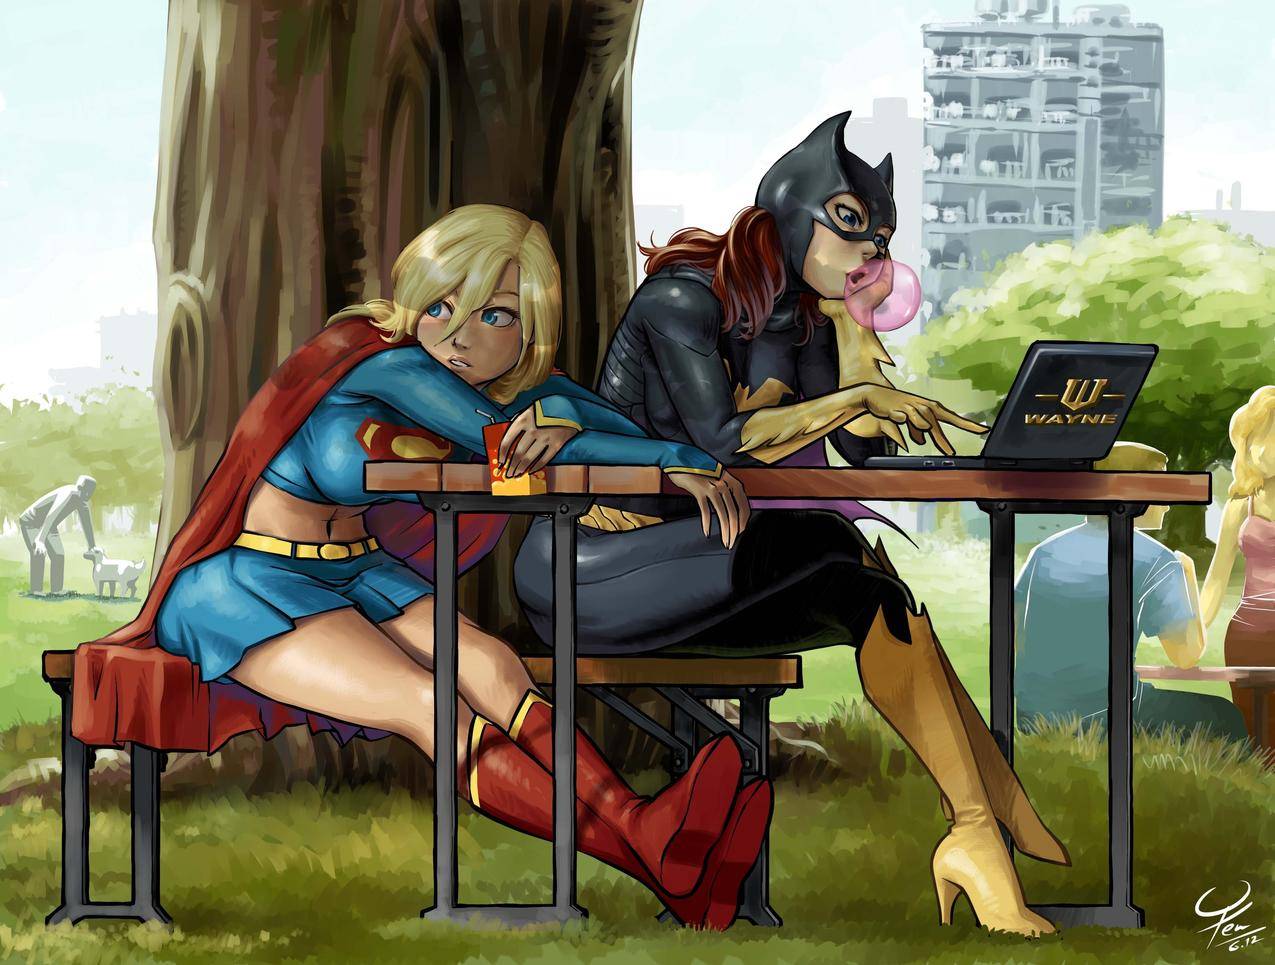 Batgirl,超级女声,DCCOMICS,卡通,艺术品,超级女主人,笔记本电脑,树,椅子,泡泡糖,国家公园,斗篷,面具,靴子